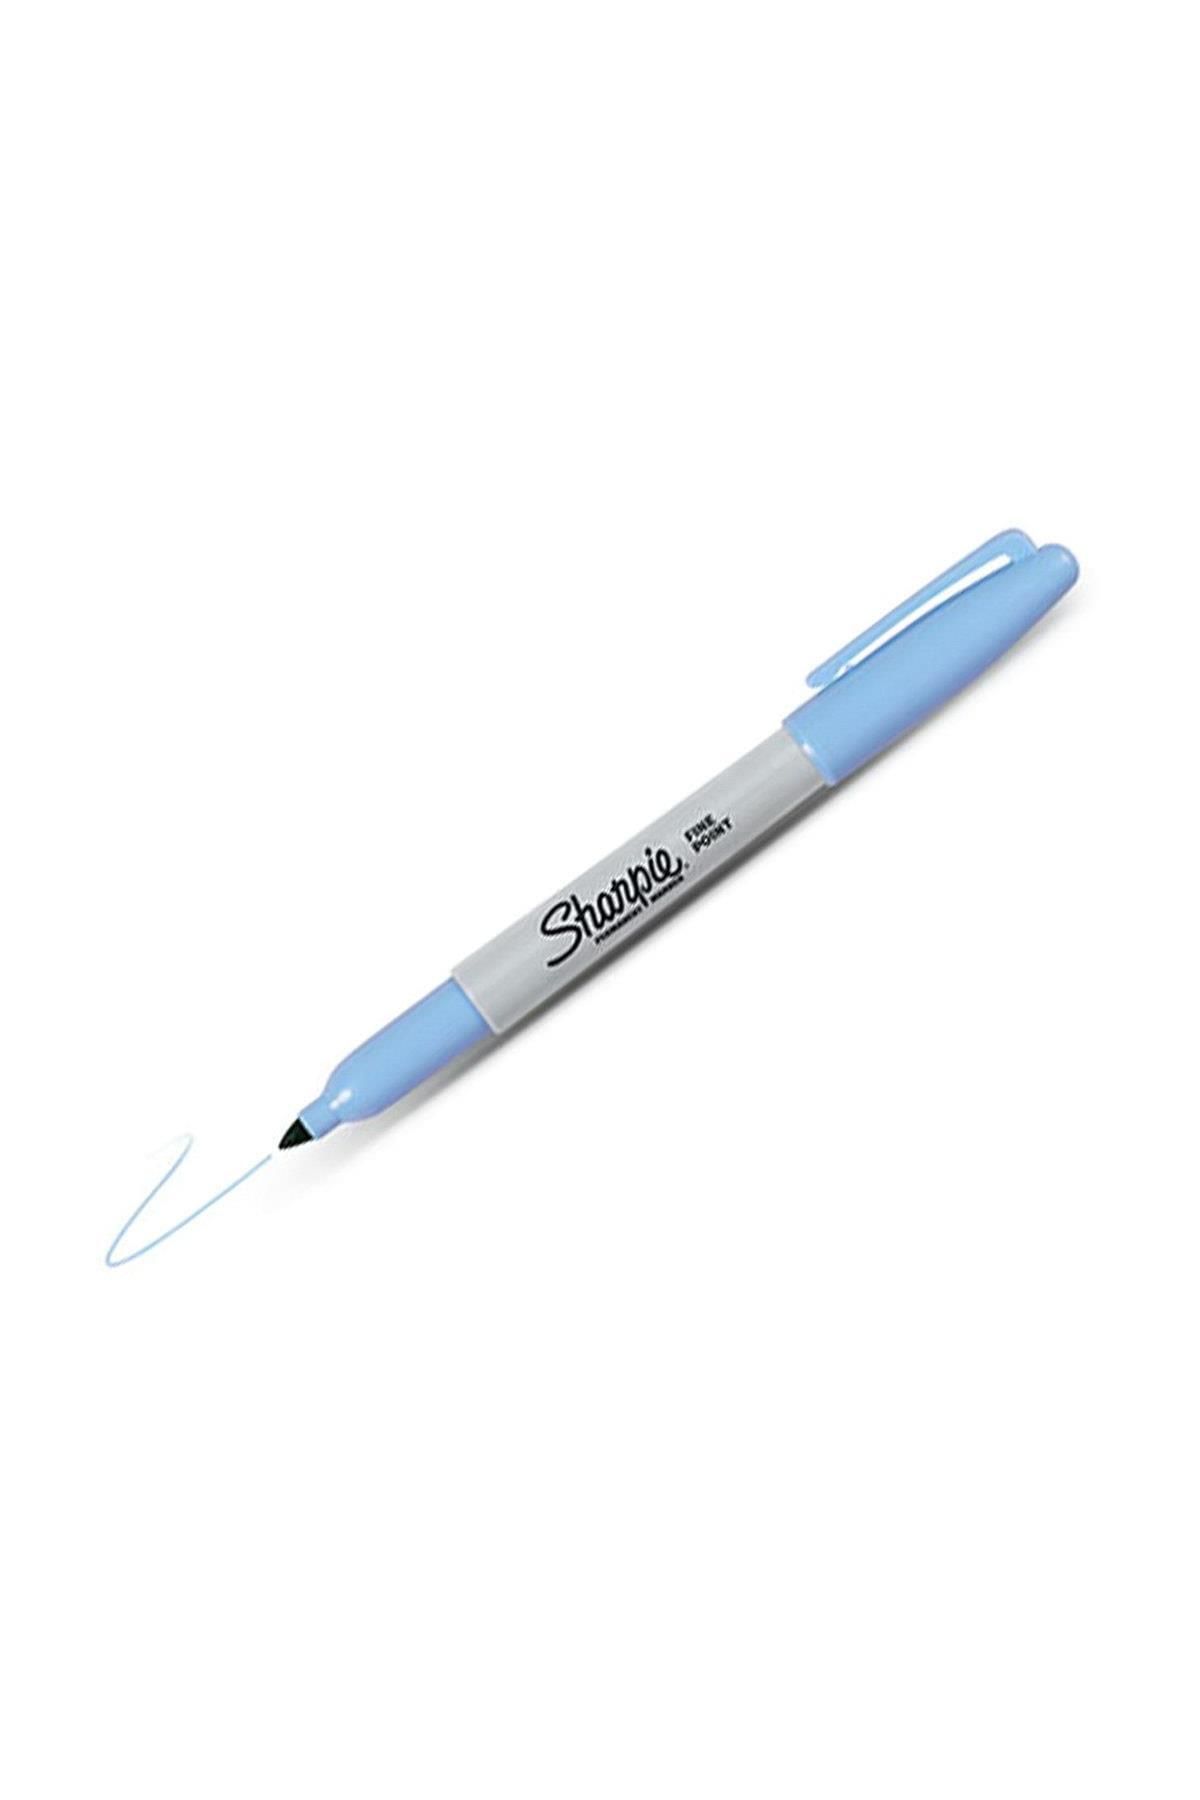 Sharpie Sharpıe Açık Mavi Fıne Permanent Markör Kalem